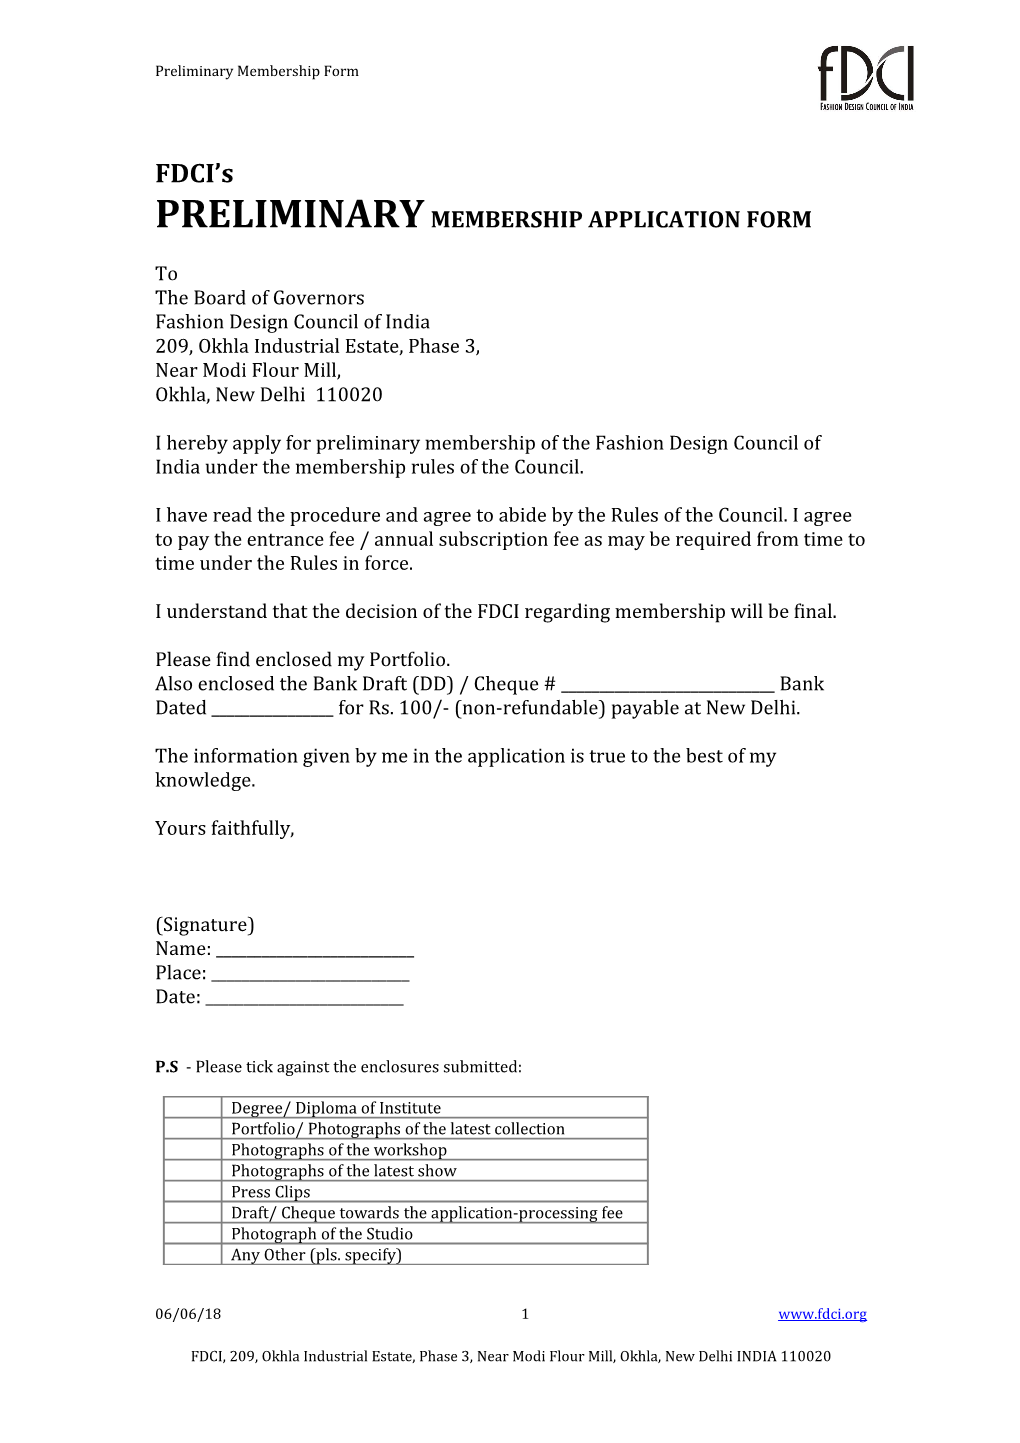 Preliminary Membership Application Form